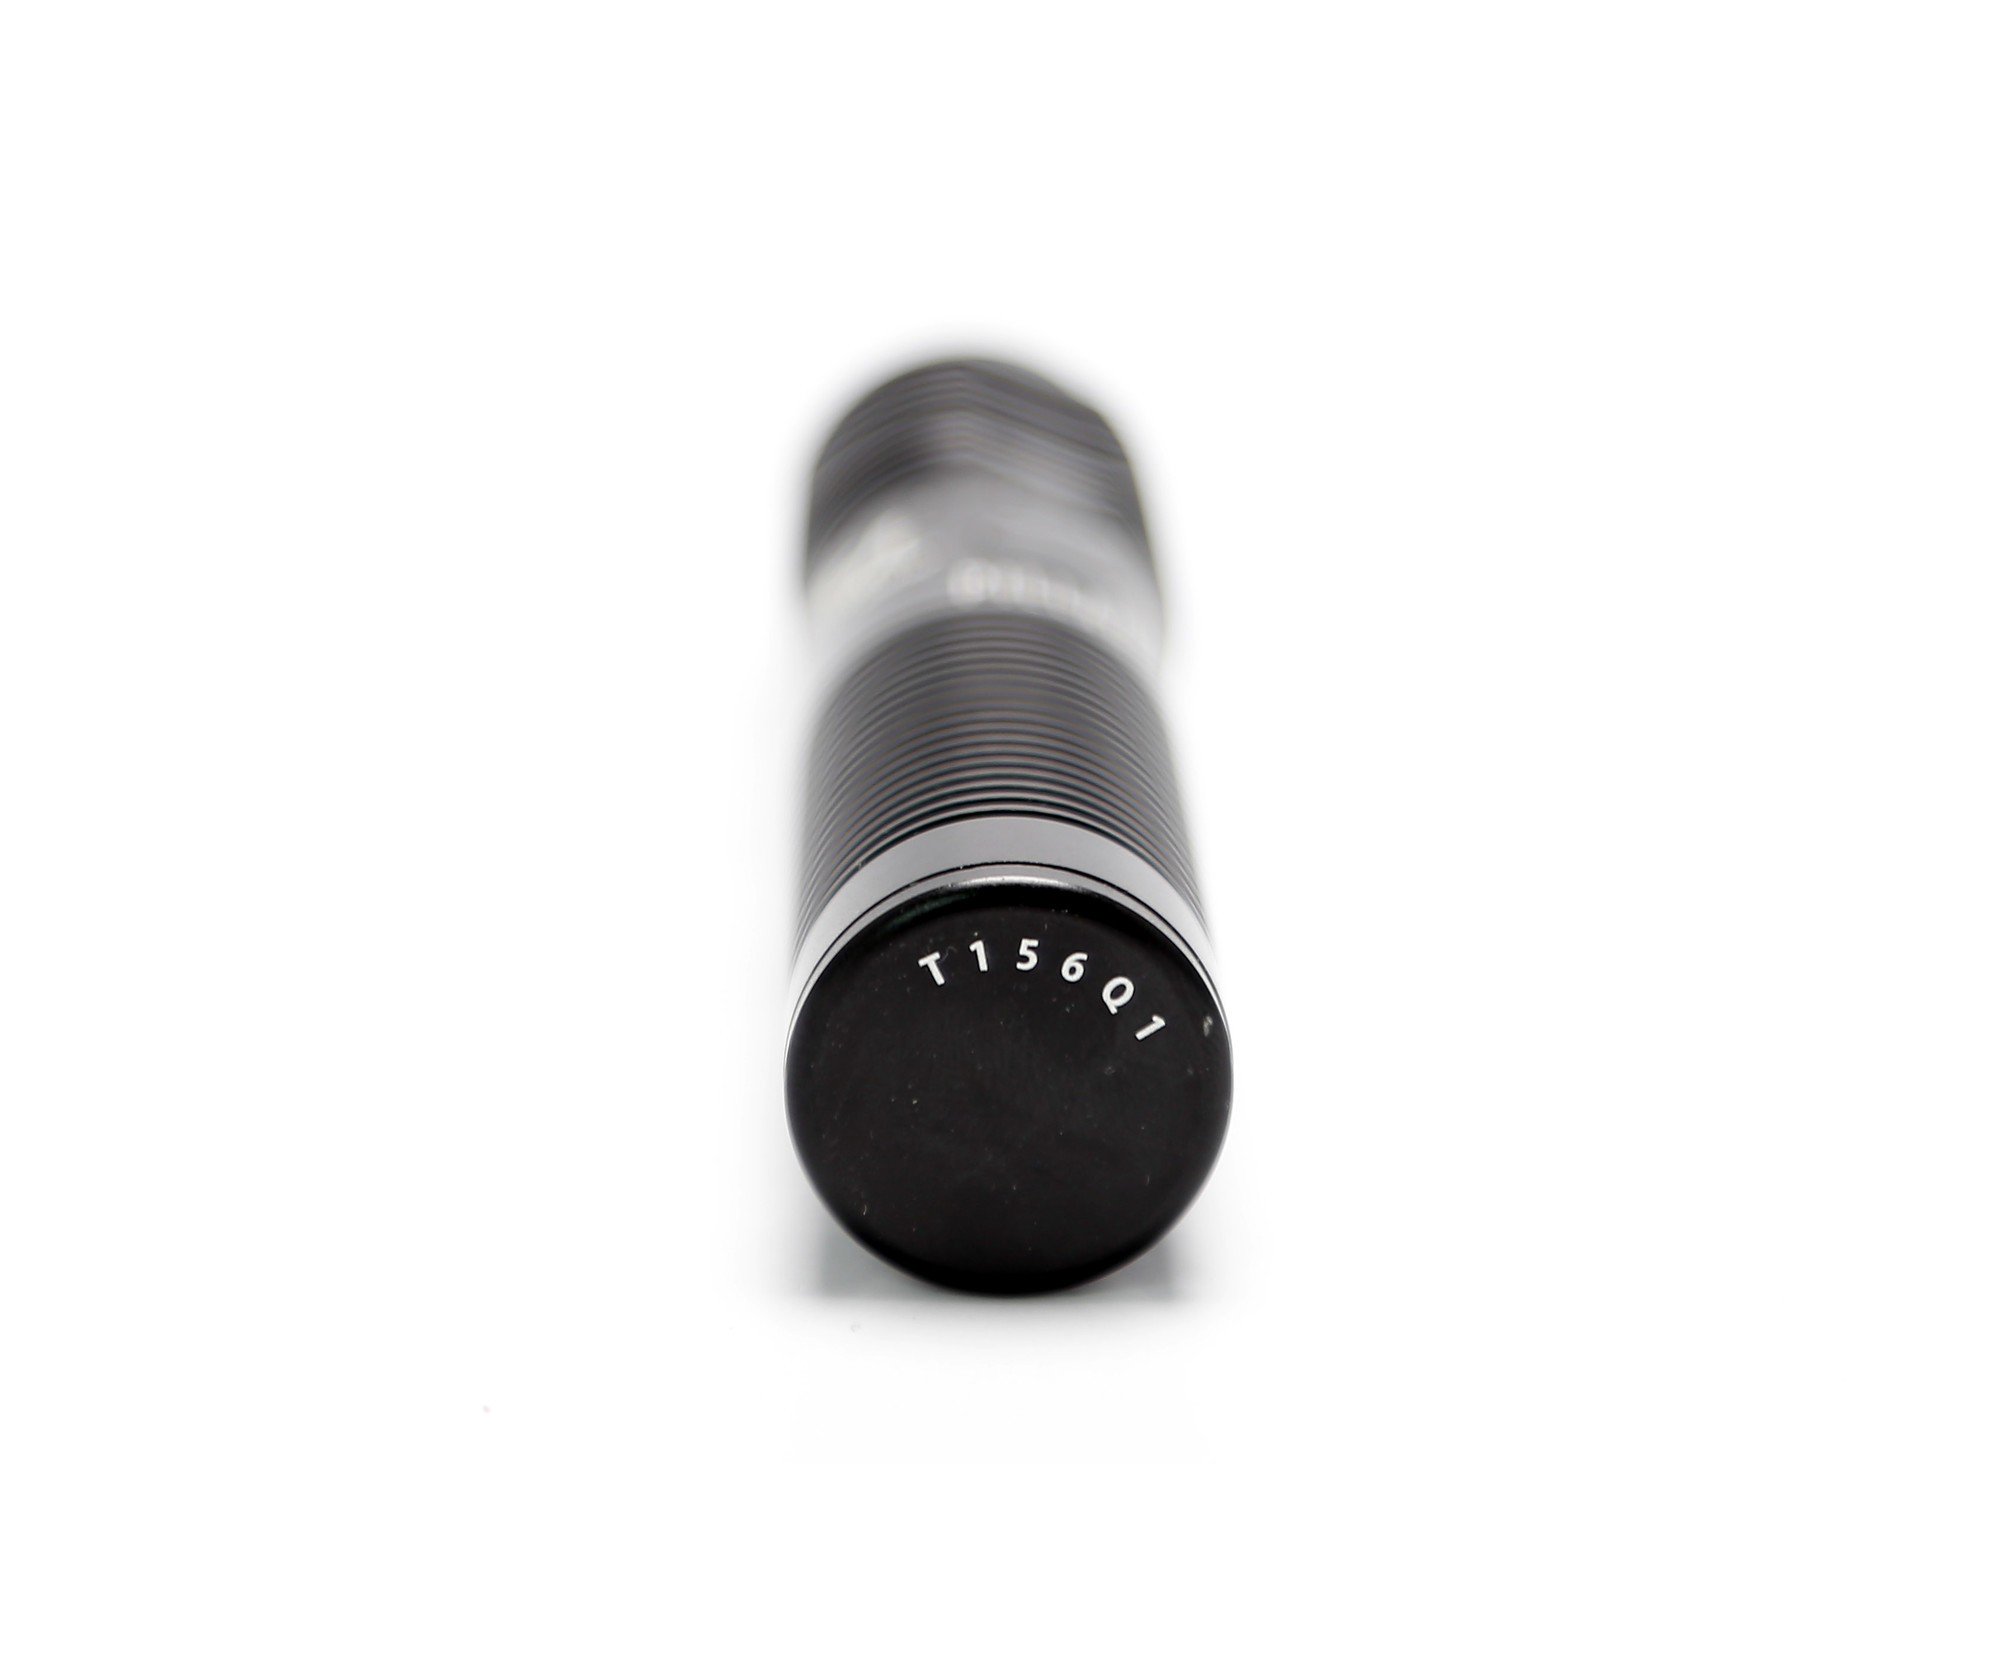 Atmos Tyga Shine Pillar Kit Vaporizer - Black